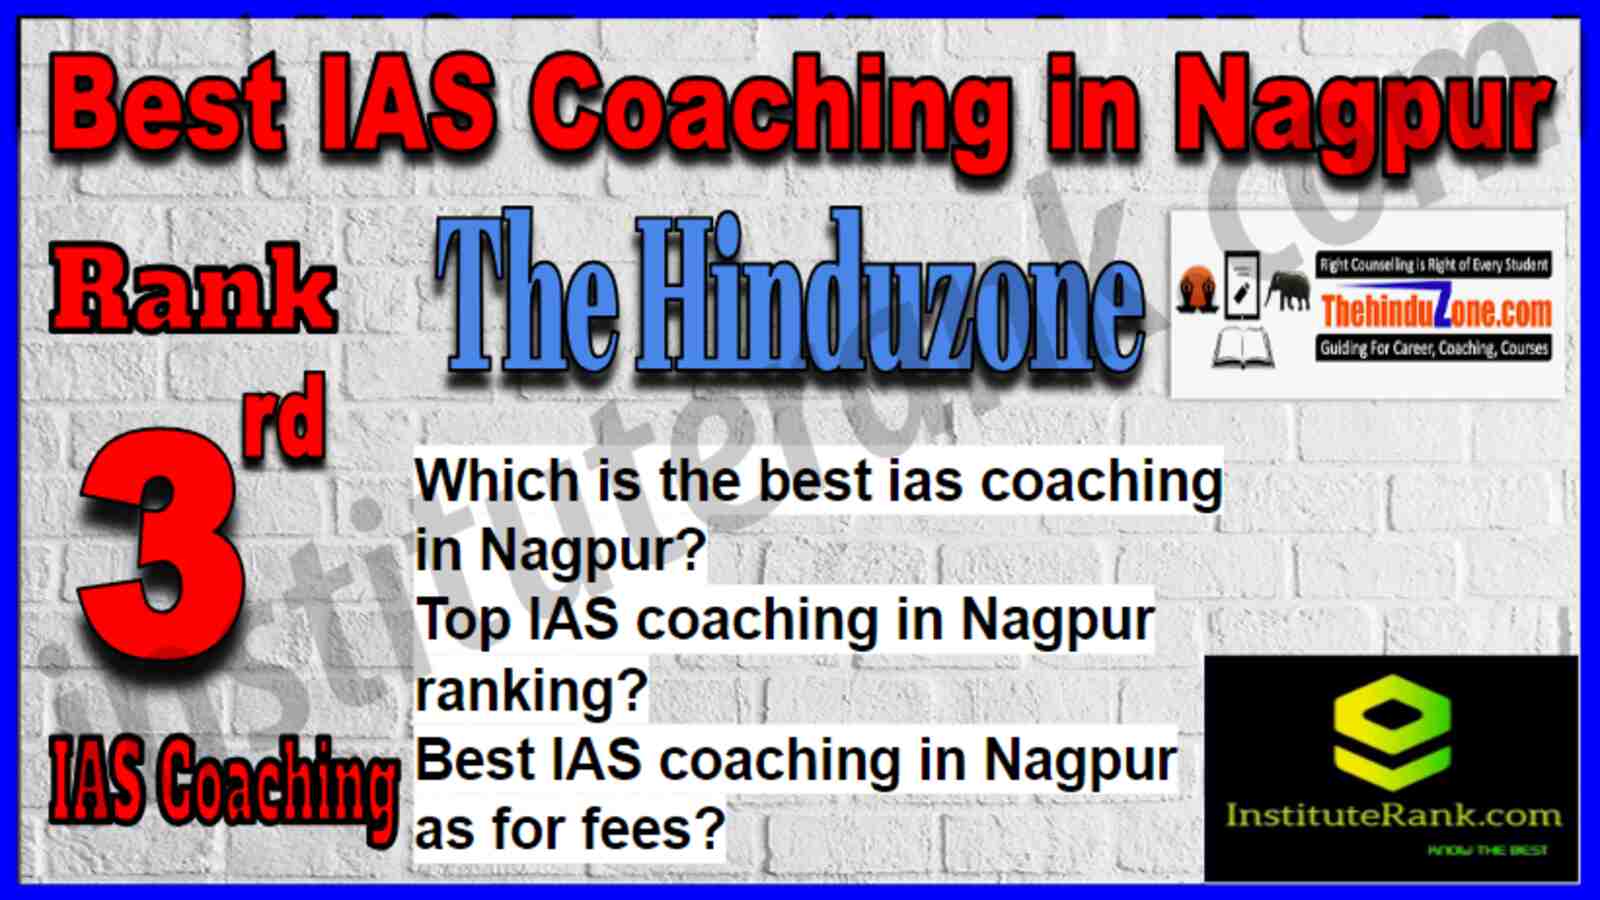 Rank 3 Best IAS Coaching in Nagpur